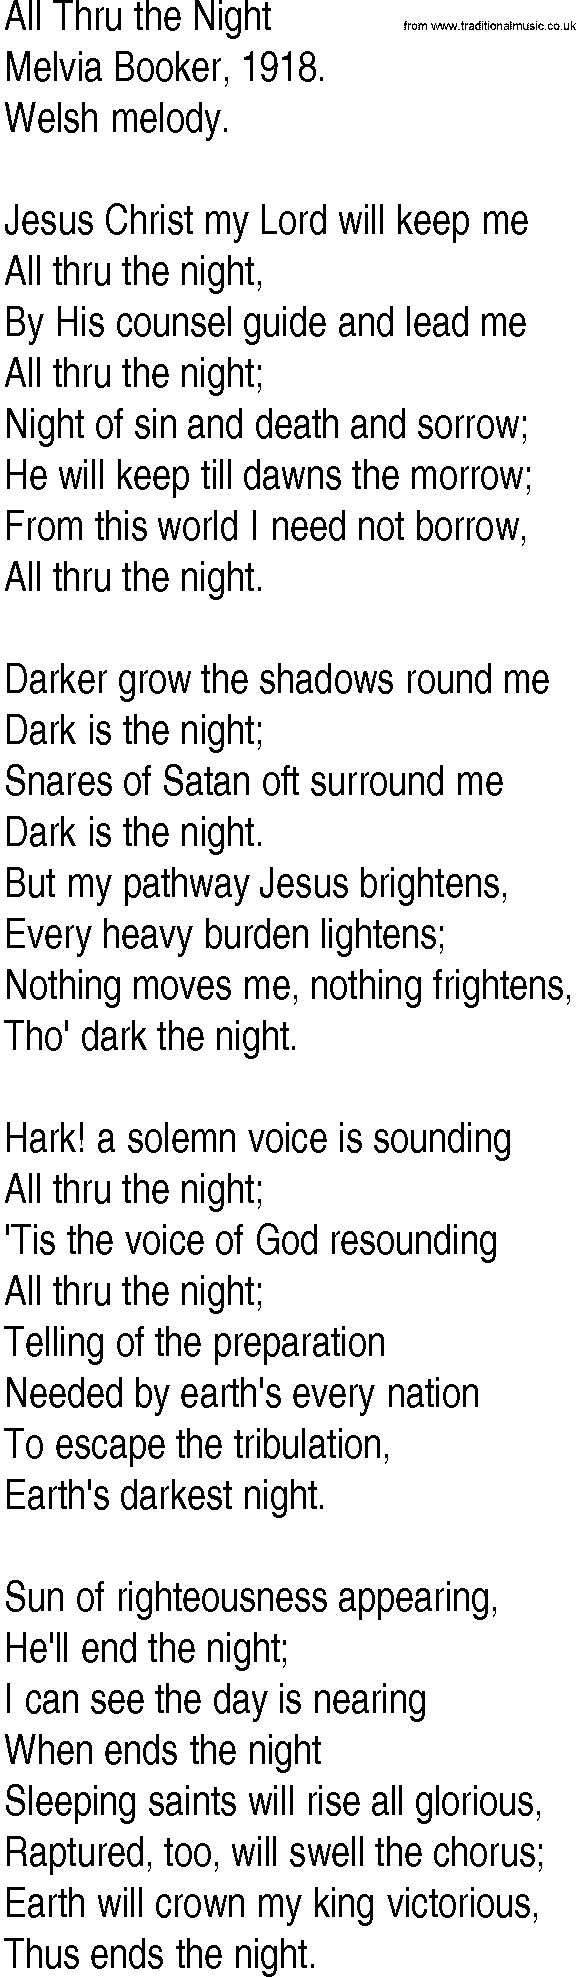 Hymn and Gospel Song: All Thru the Night by Melvia Booker lyrics